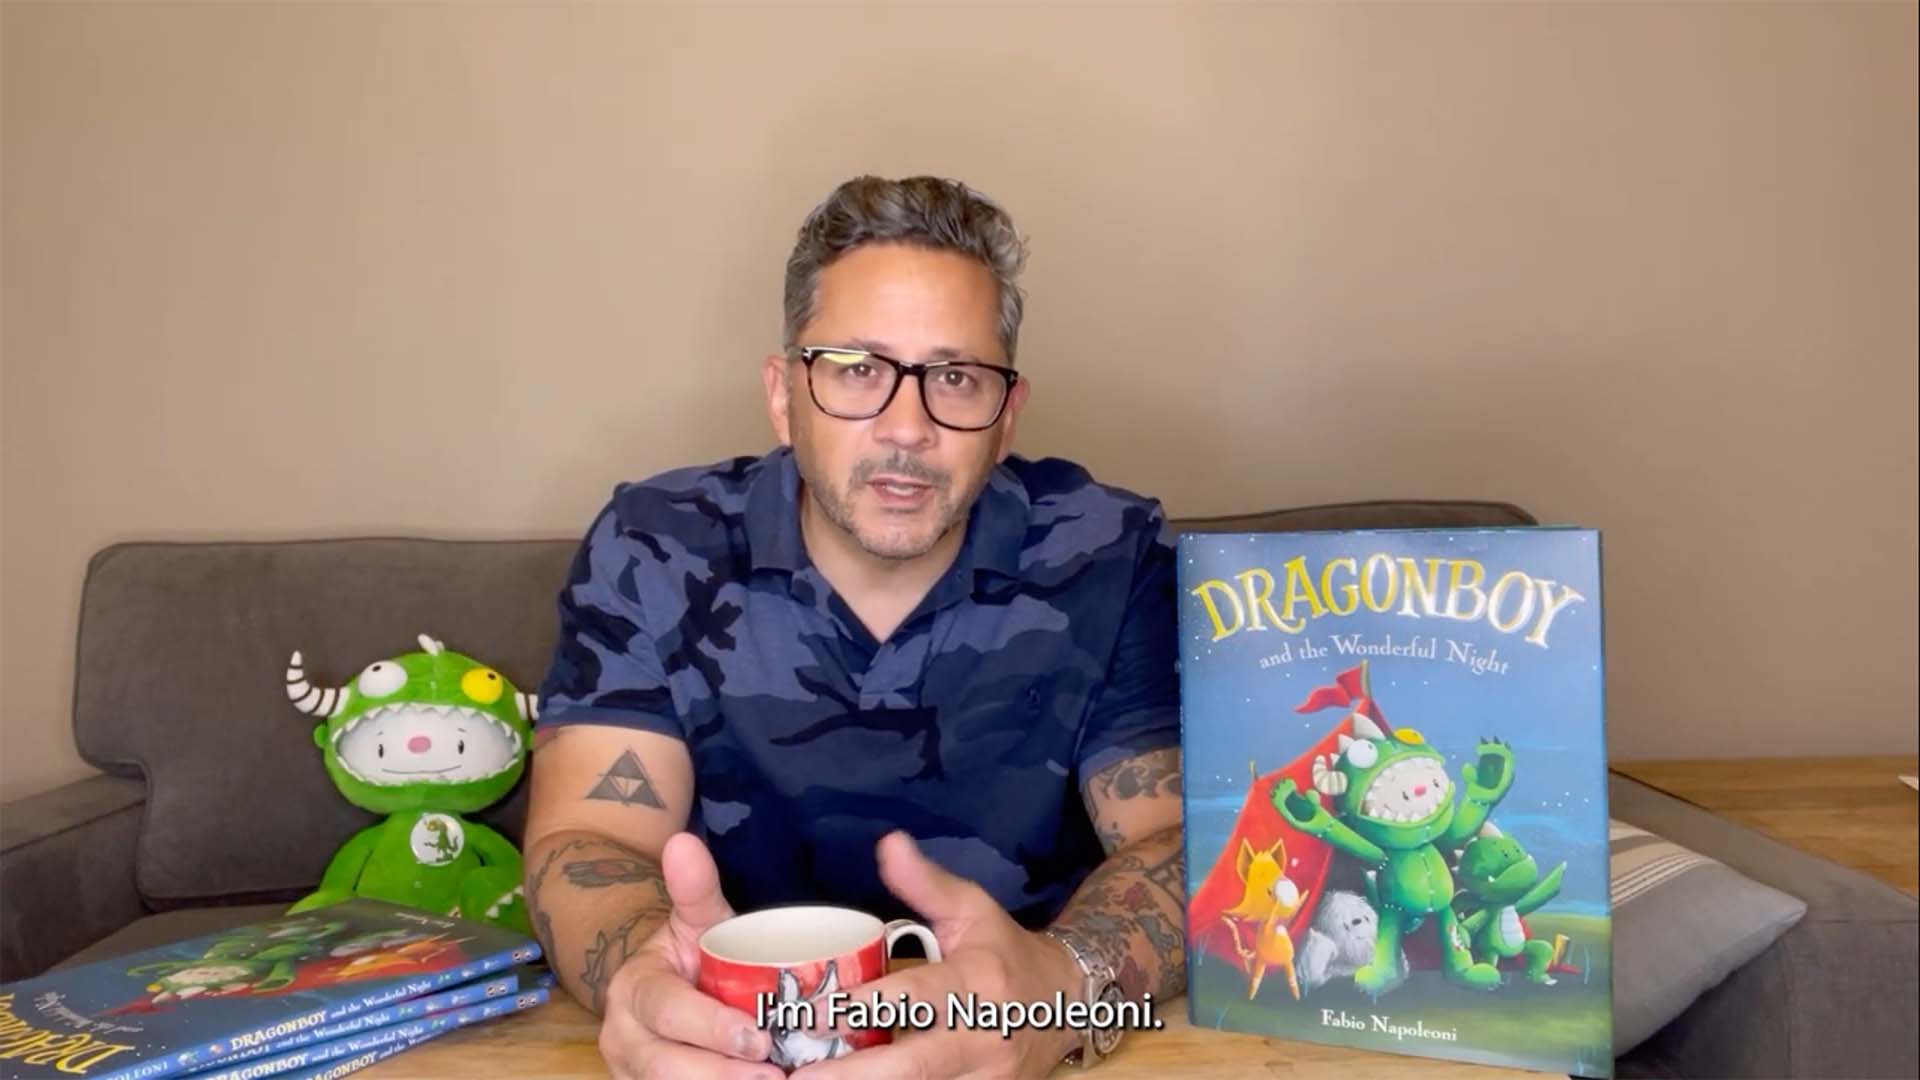 Load video: Dragonboy 2 Book